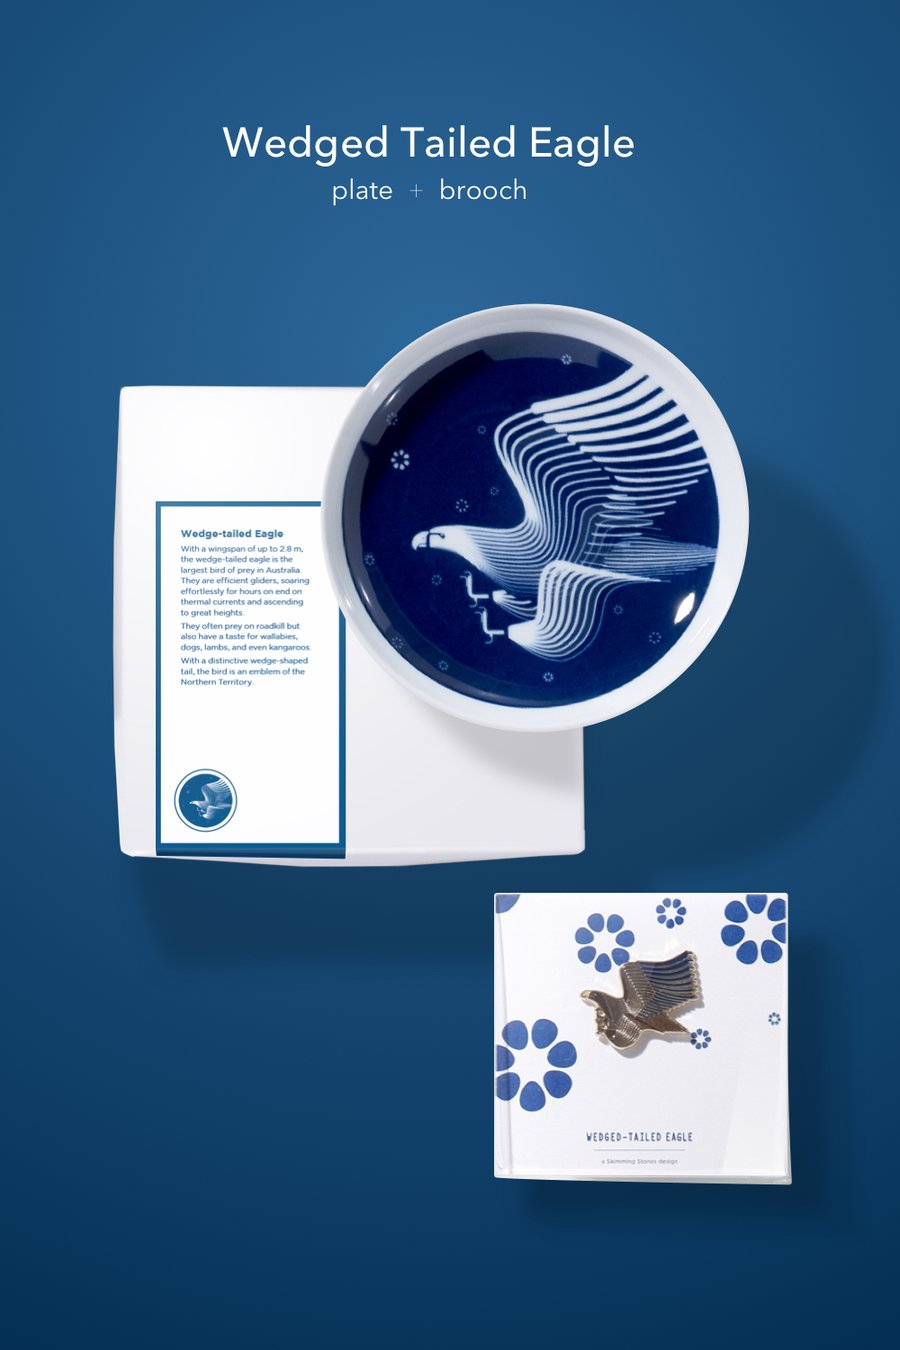 Image of Wedged-tailed Eagle gift set